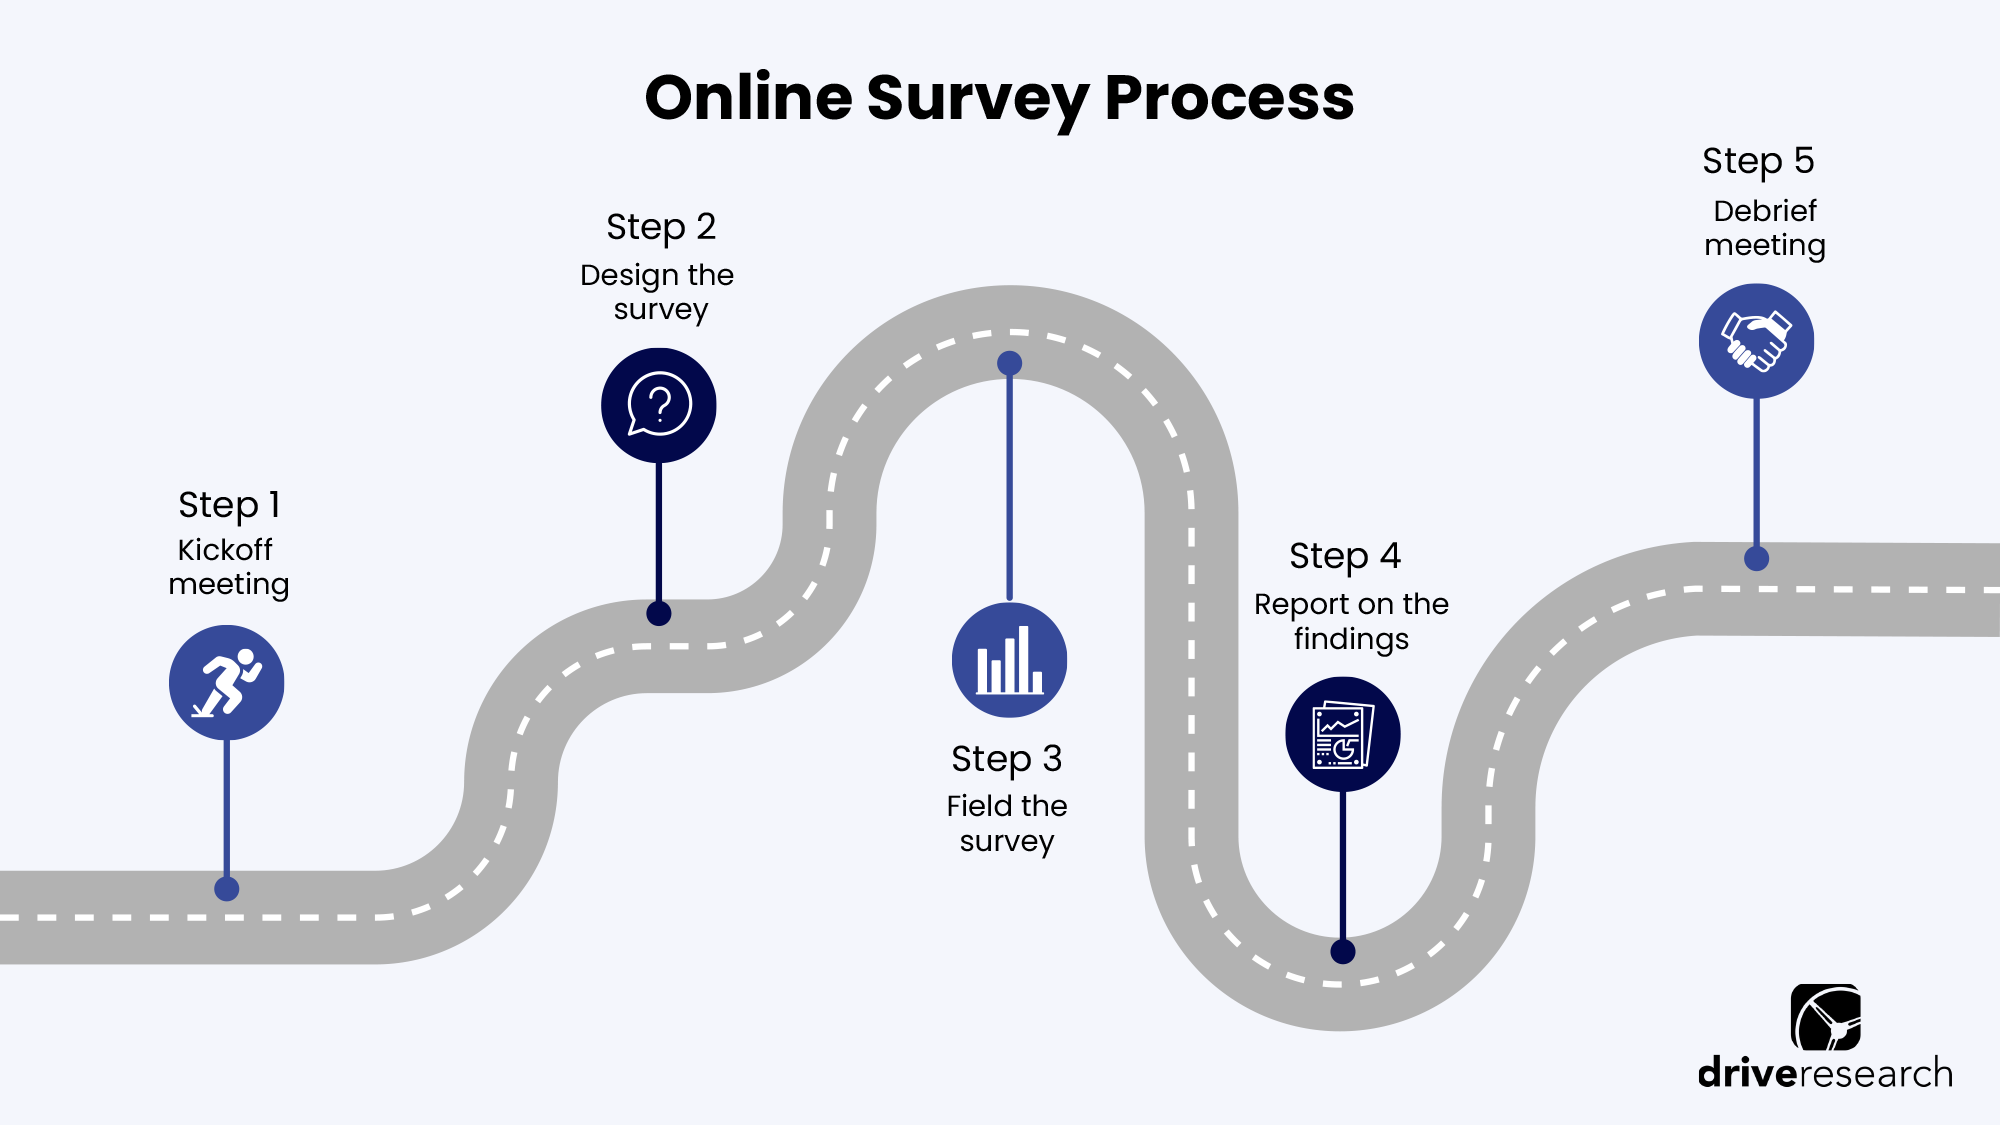 omnibus survey process